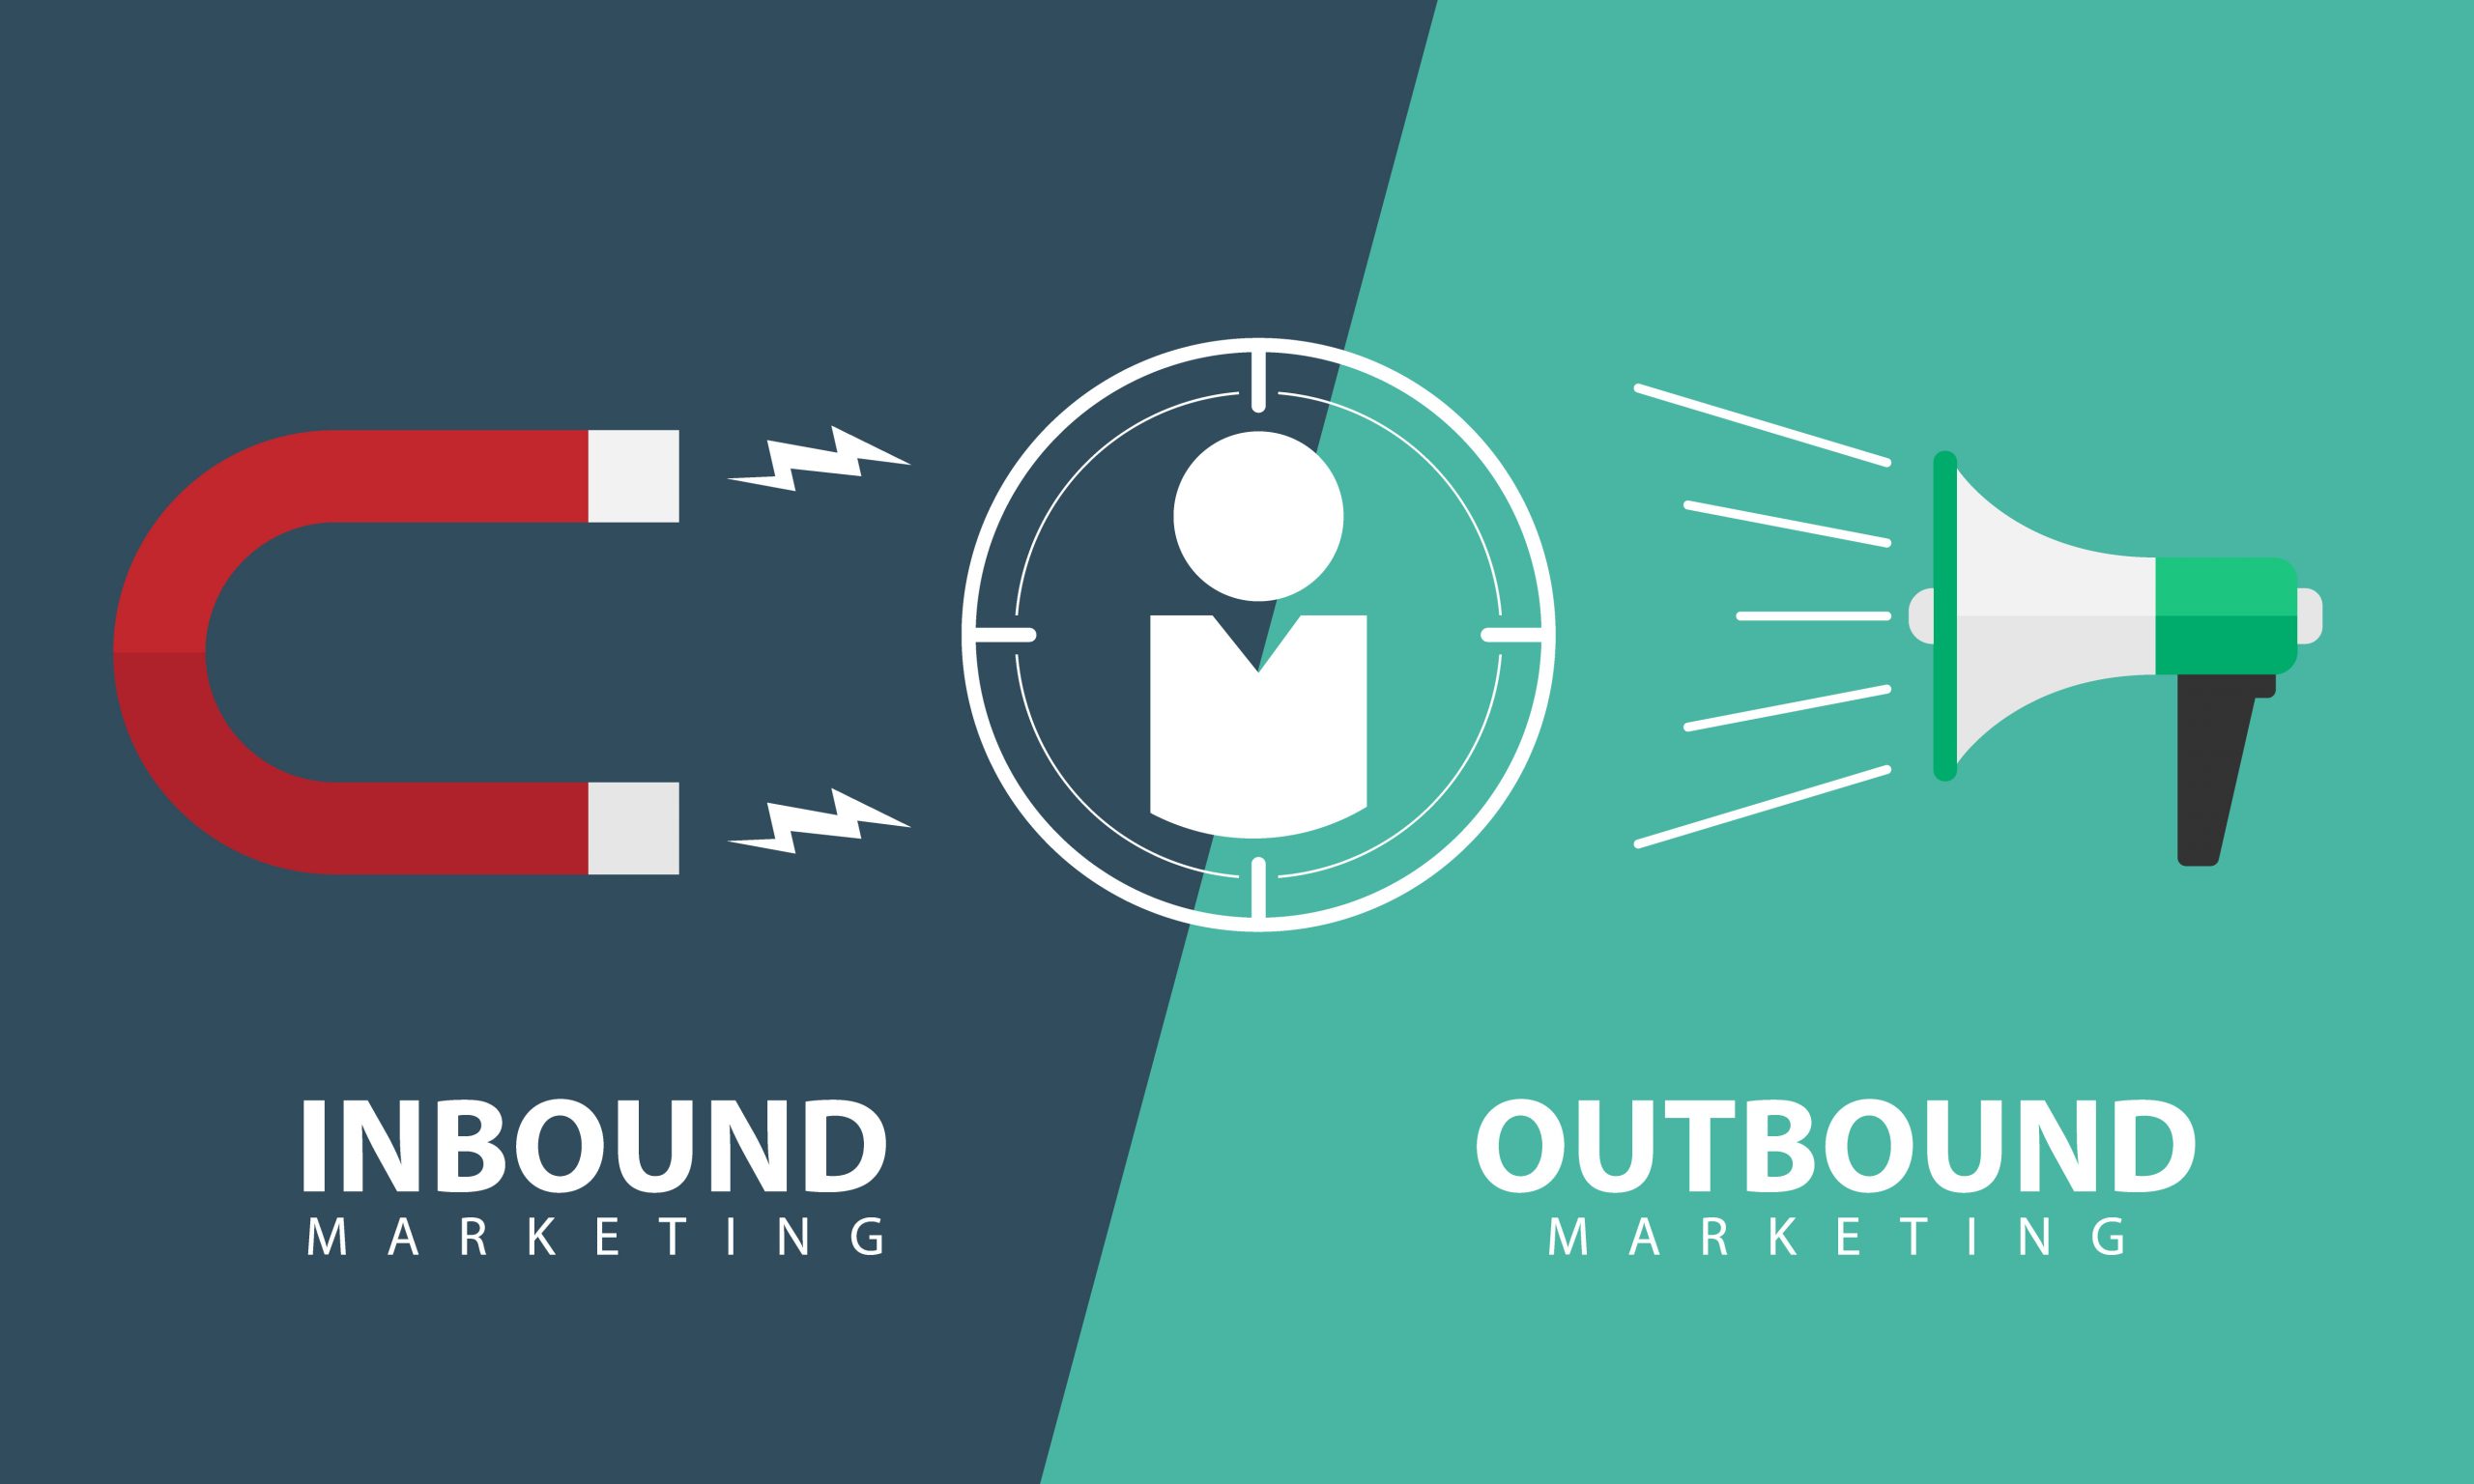 Inbound marketing and outbound marketing banner with focus custo